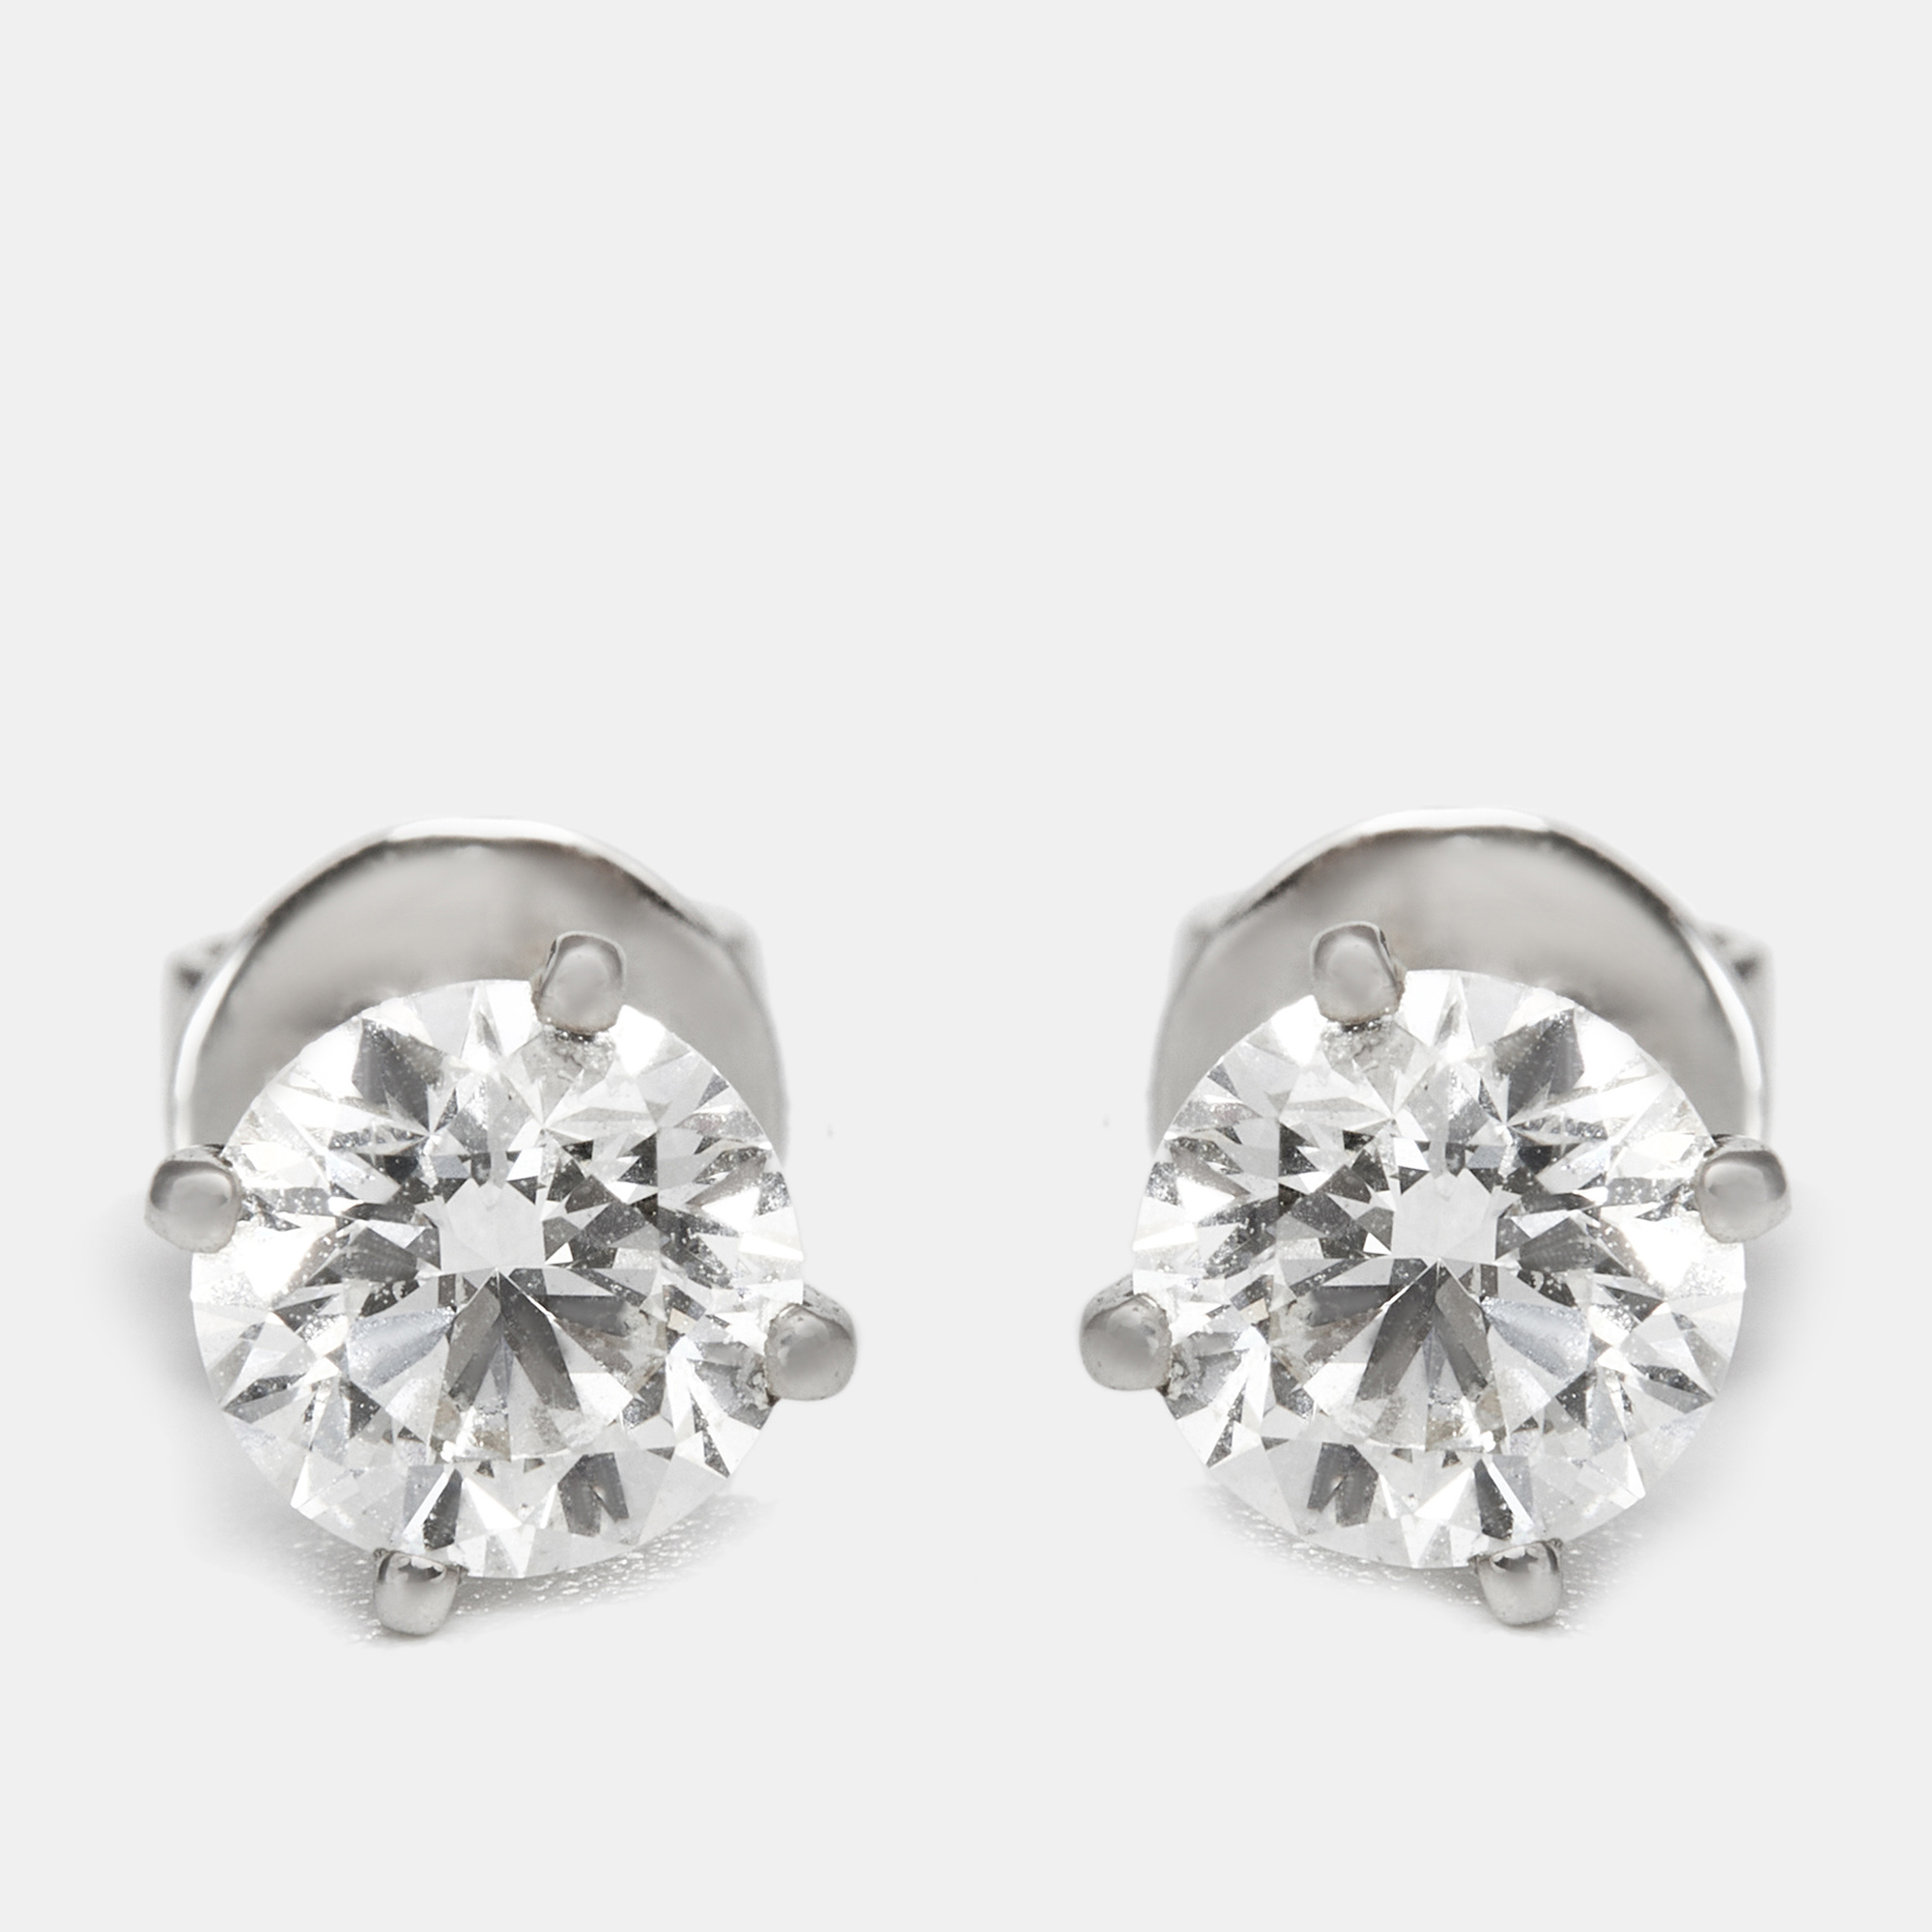 The diamond edit daily wear elegant solitaire diamonds (1.00 ct) 18k white gold stud earrings